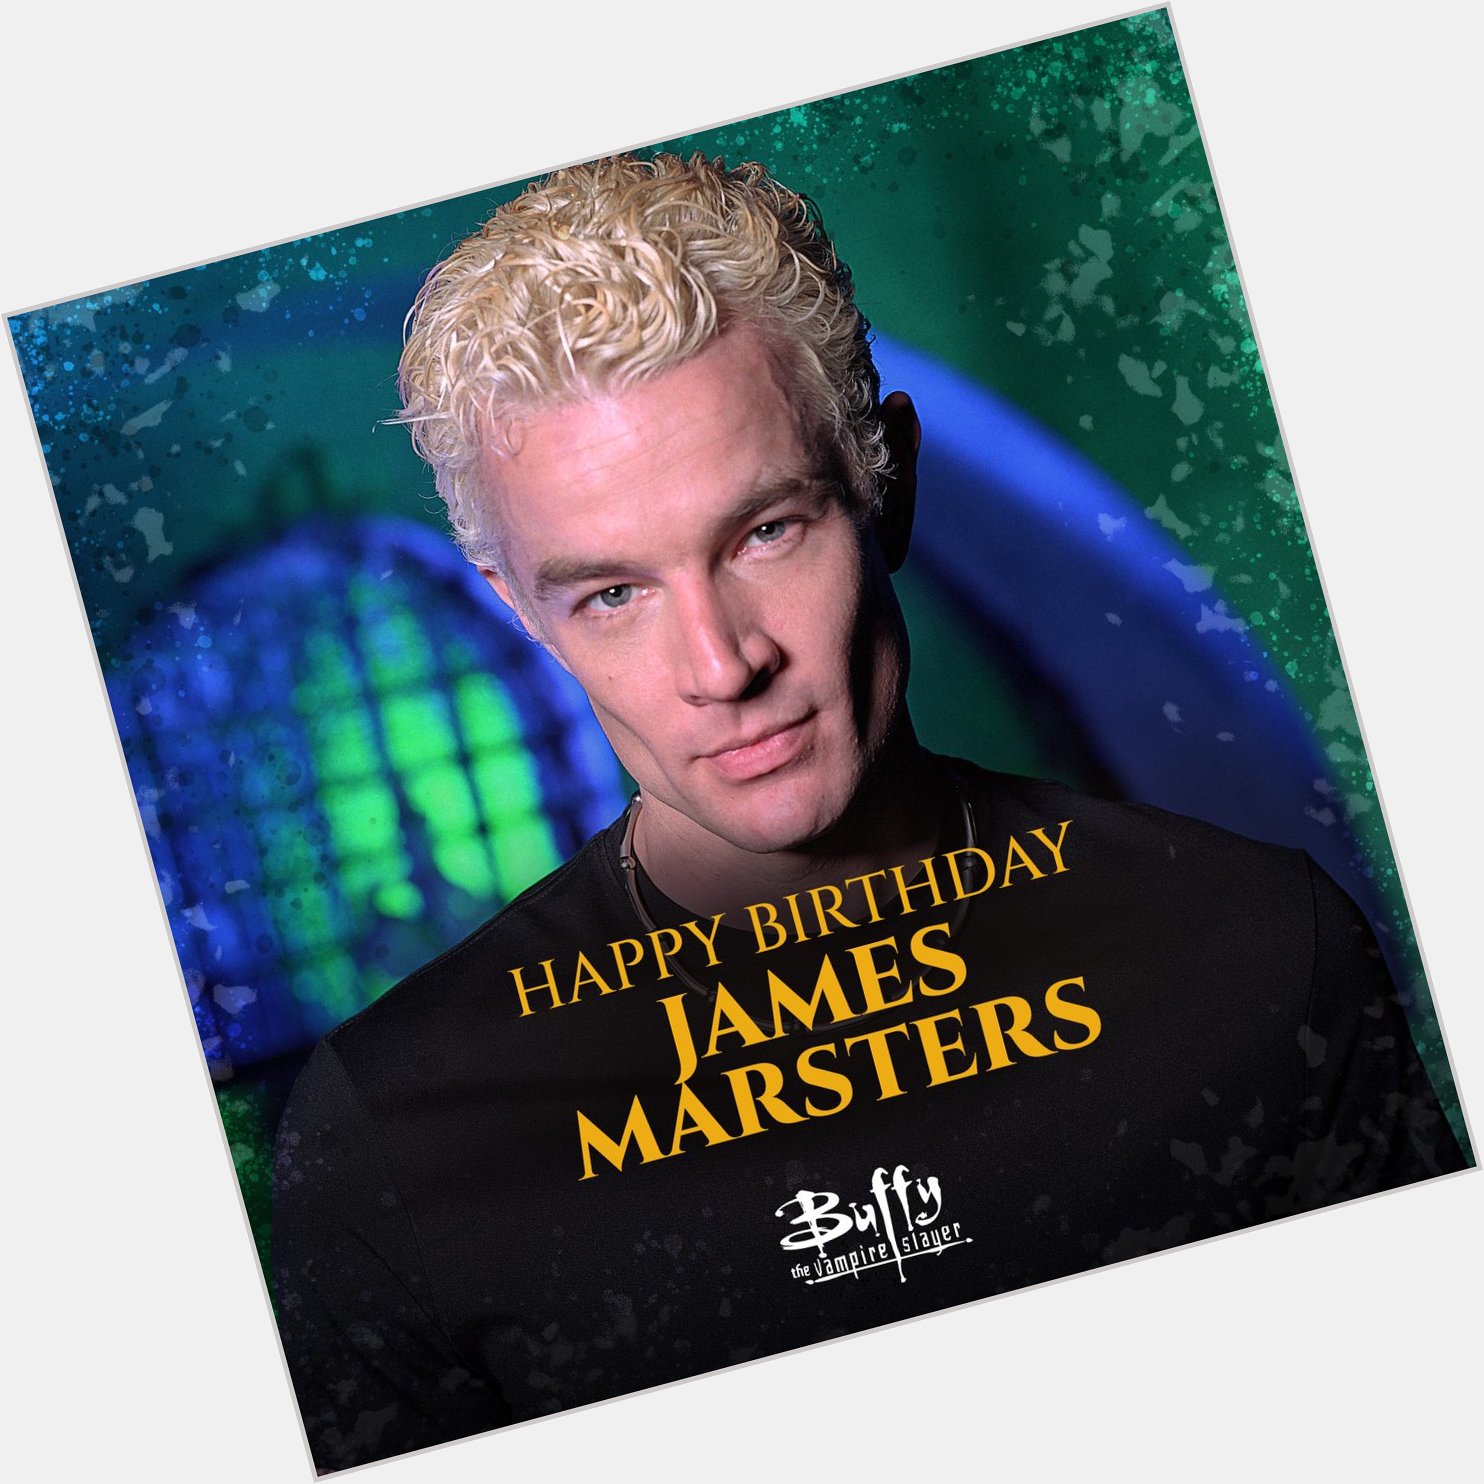 Happy birthday James Marsters! Make sure to wish him a happy birthday today, Slayers! 